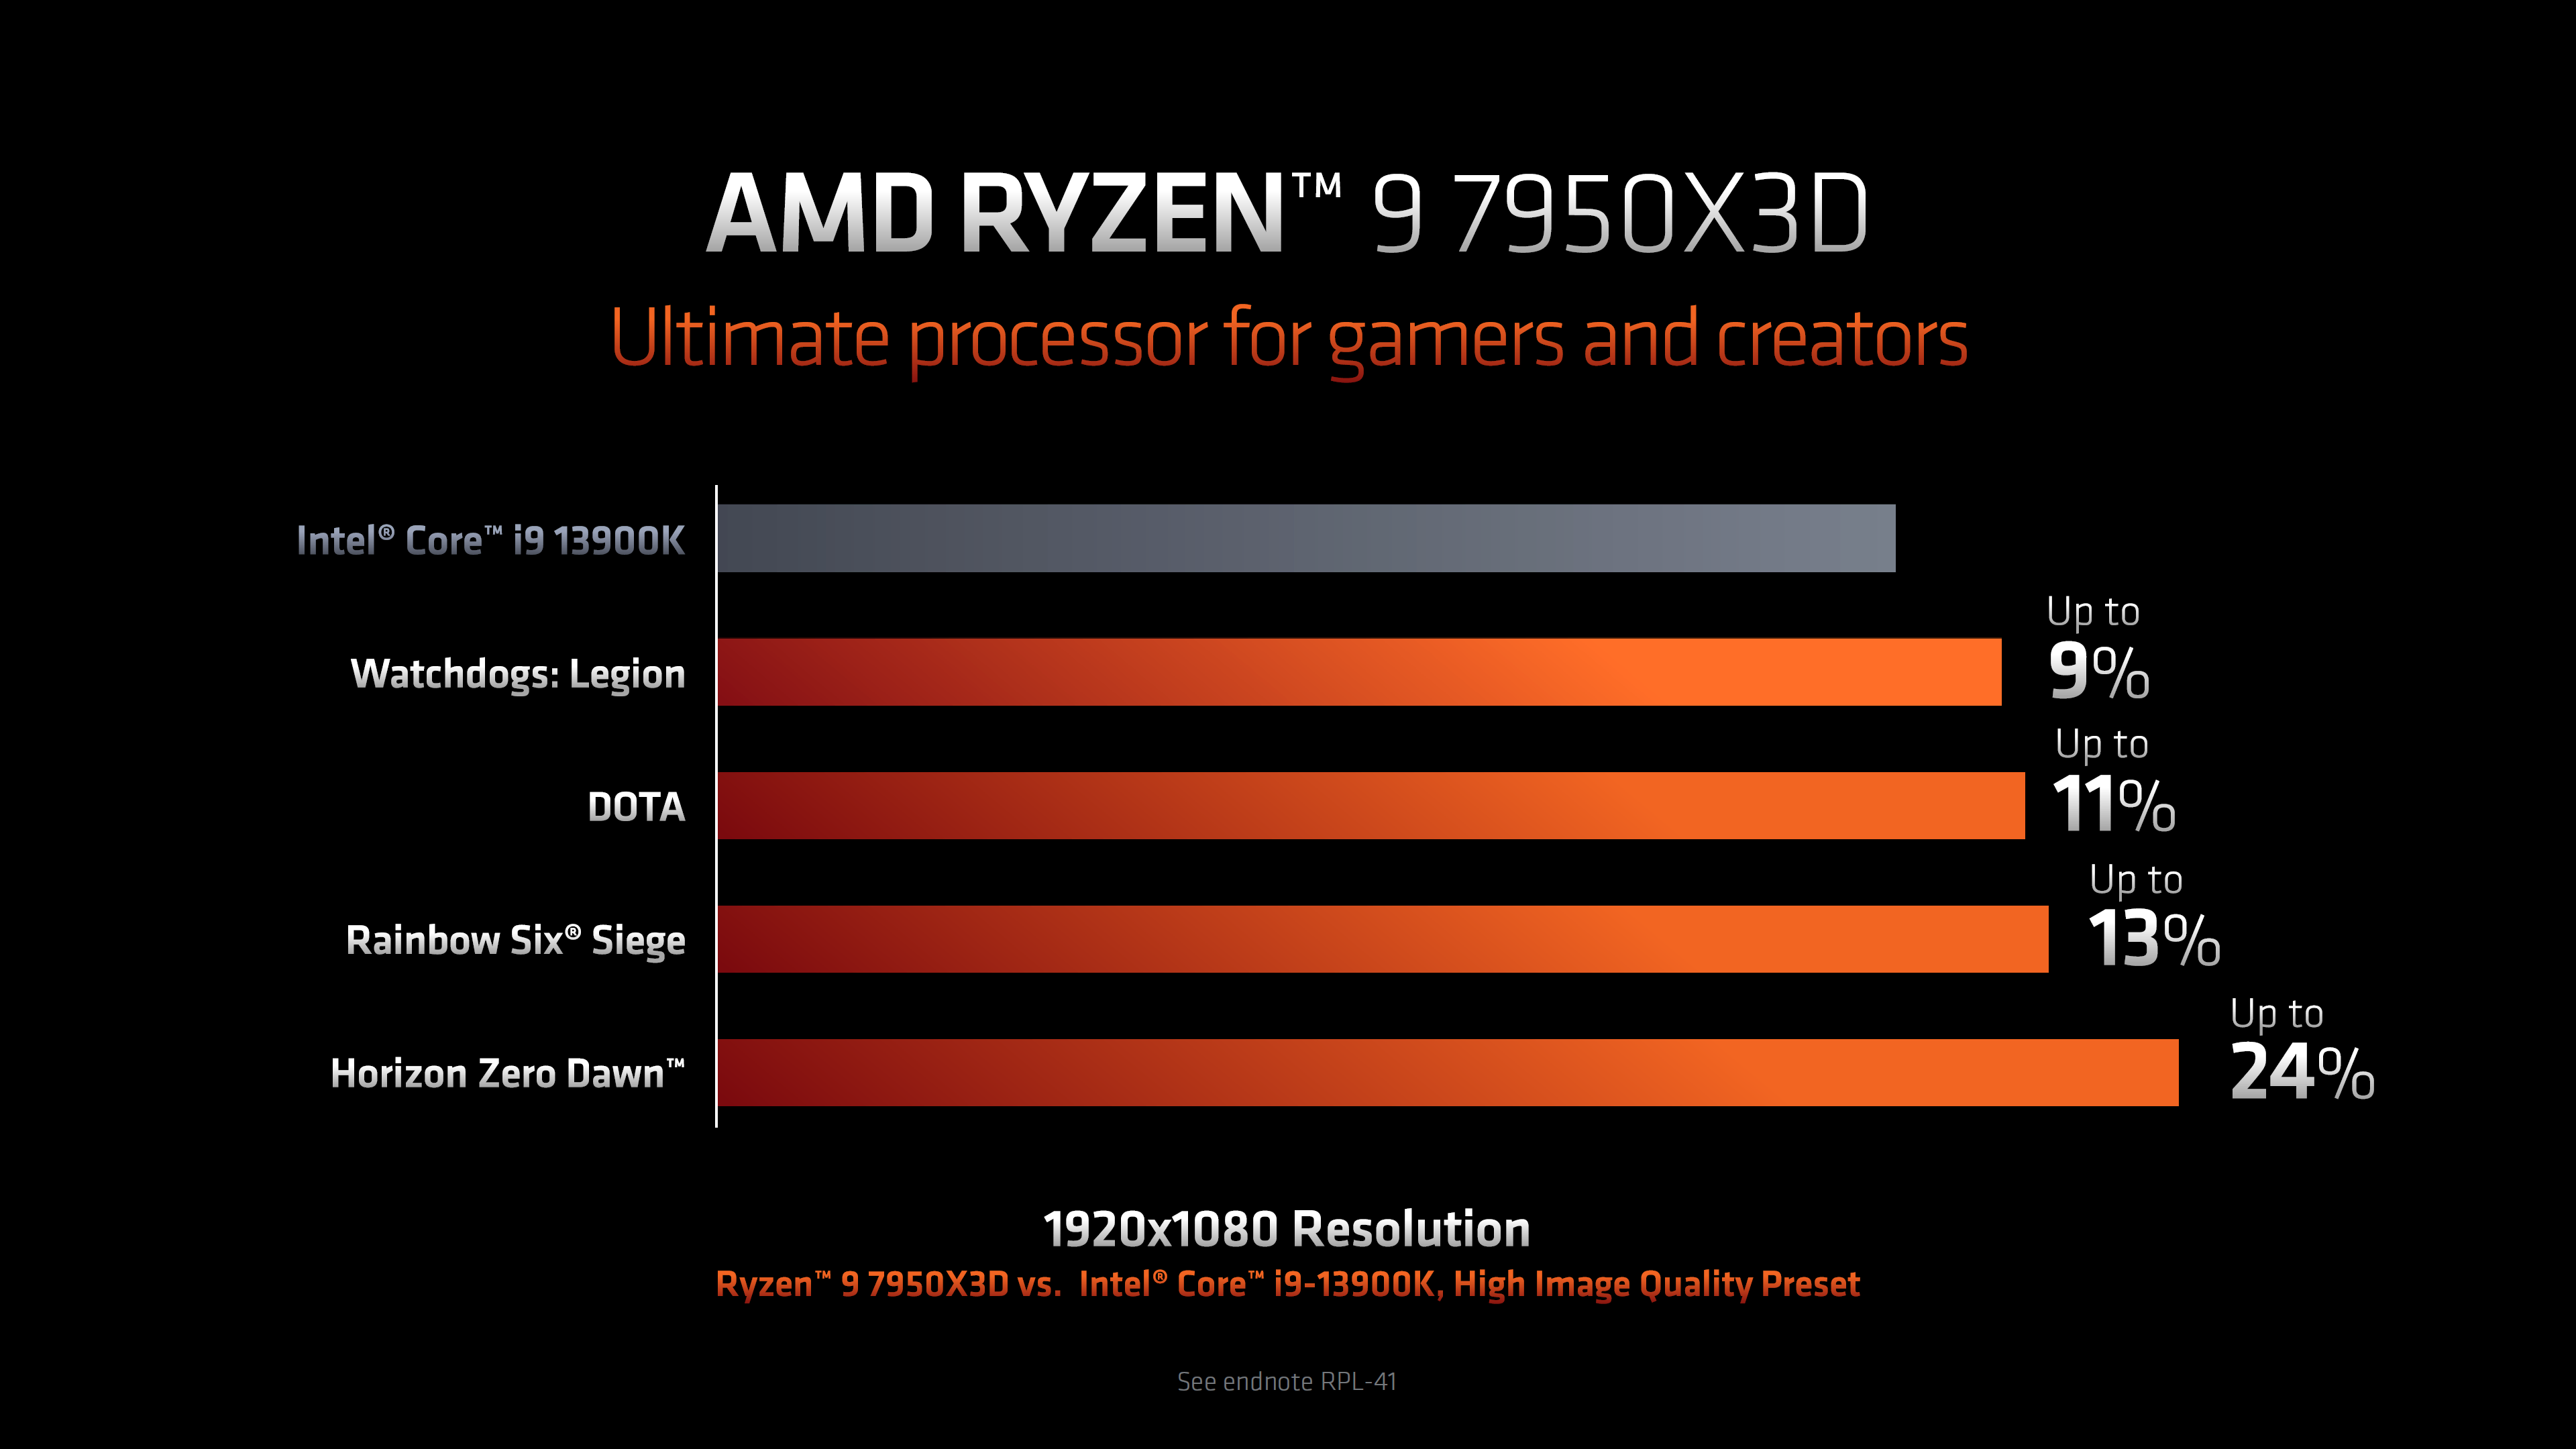 AMD Ryzen 9 7950X vs. Ryzen 9 7950X3D: 3D V-cache compared